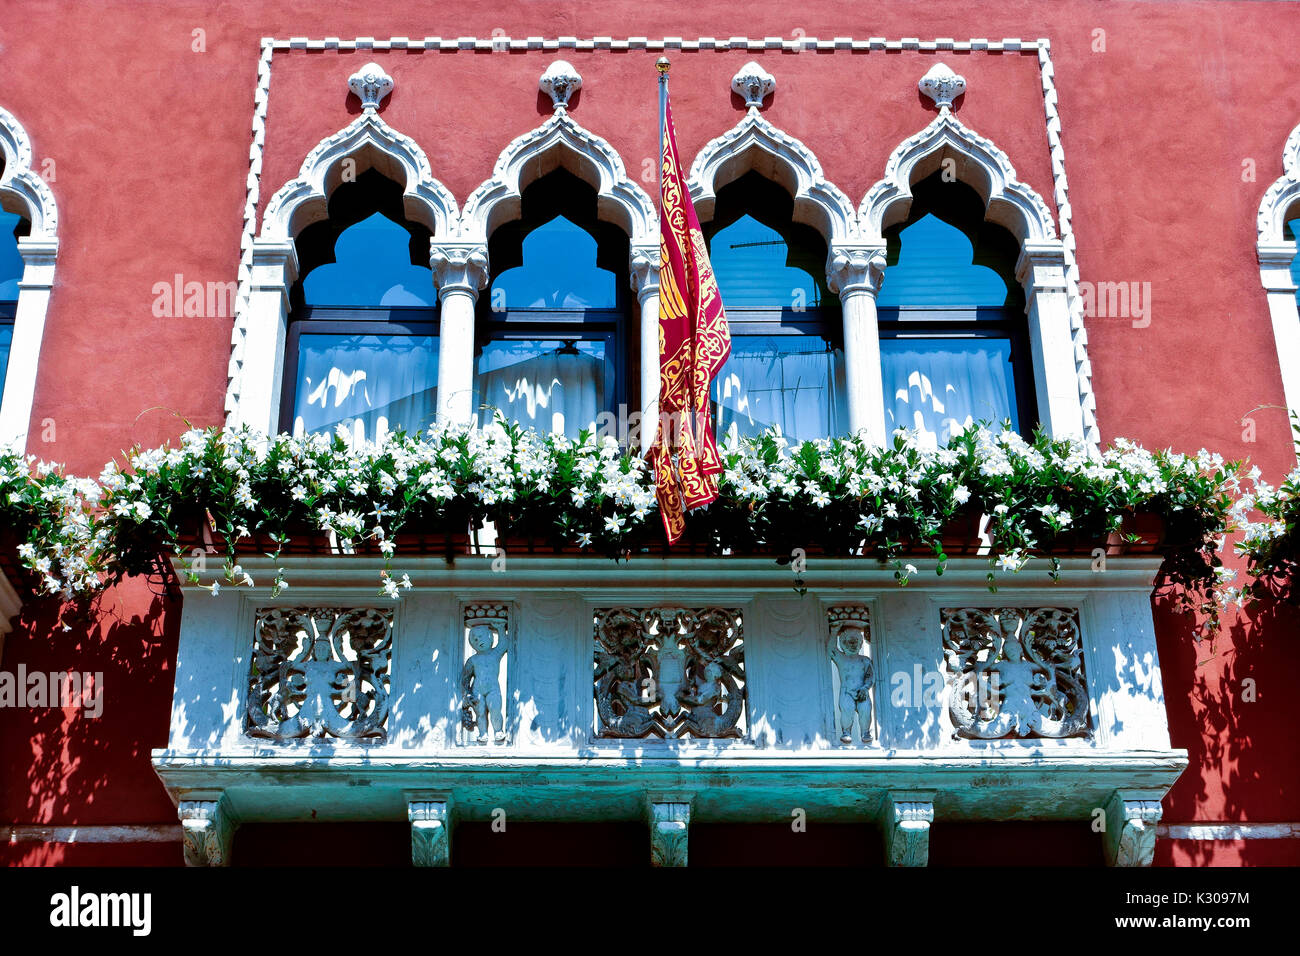 Renaissance palace, double arched windows and balcony. Flag. Venice, Veneto, Italy, Europe, European Union, EU. Stock Photo